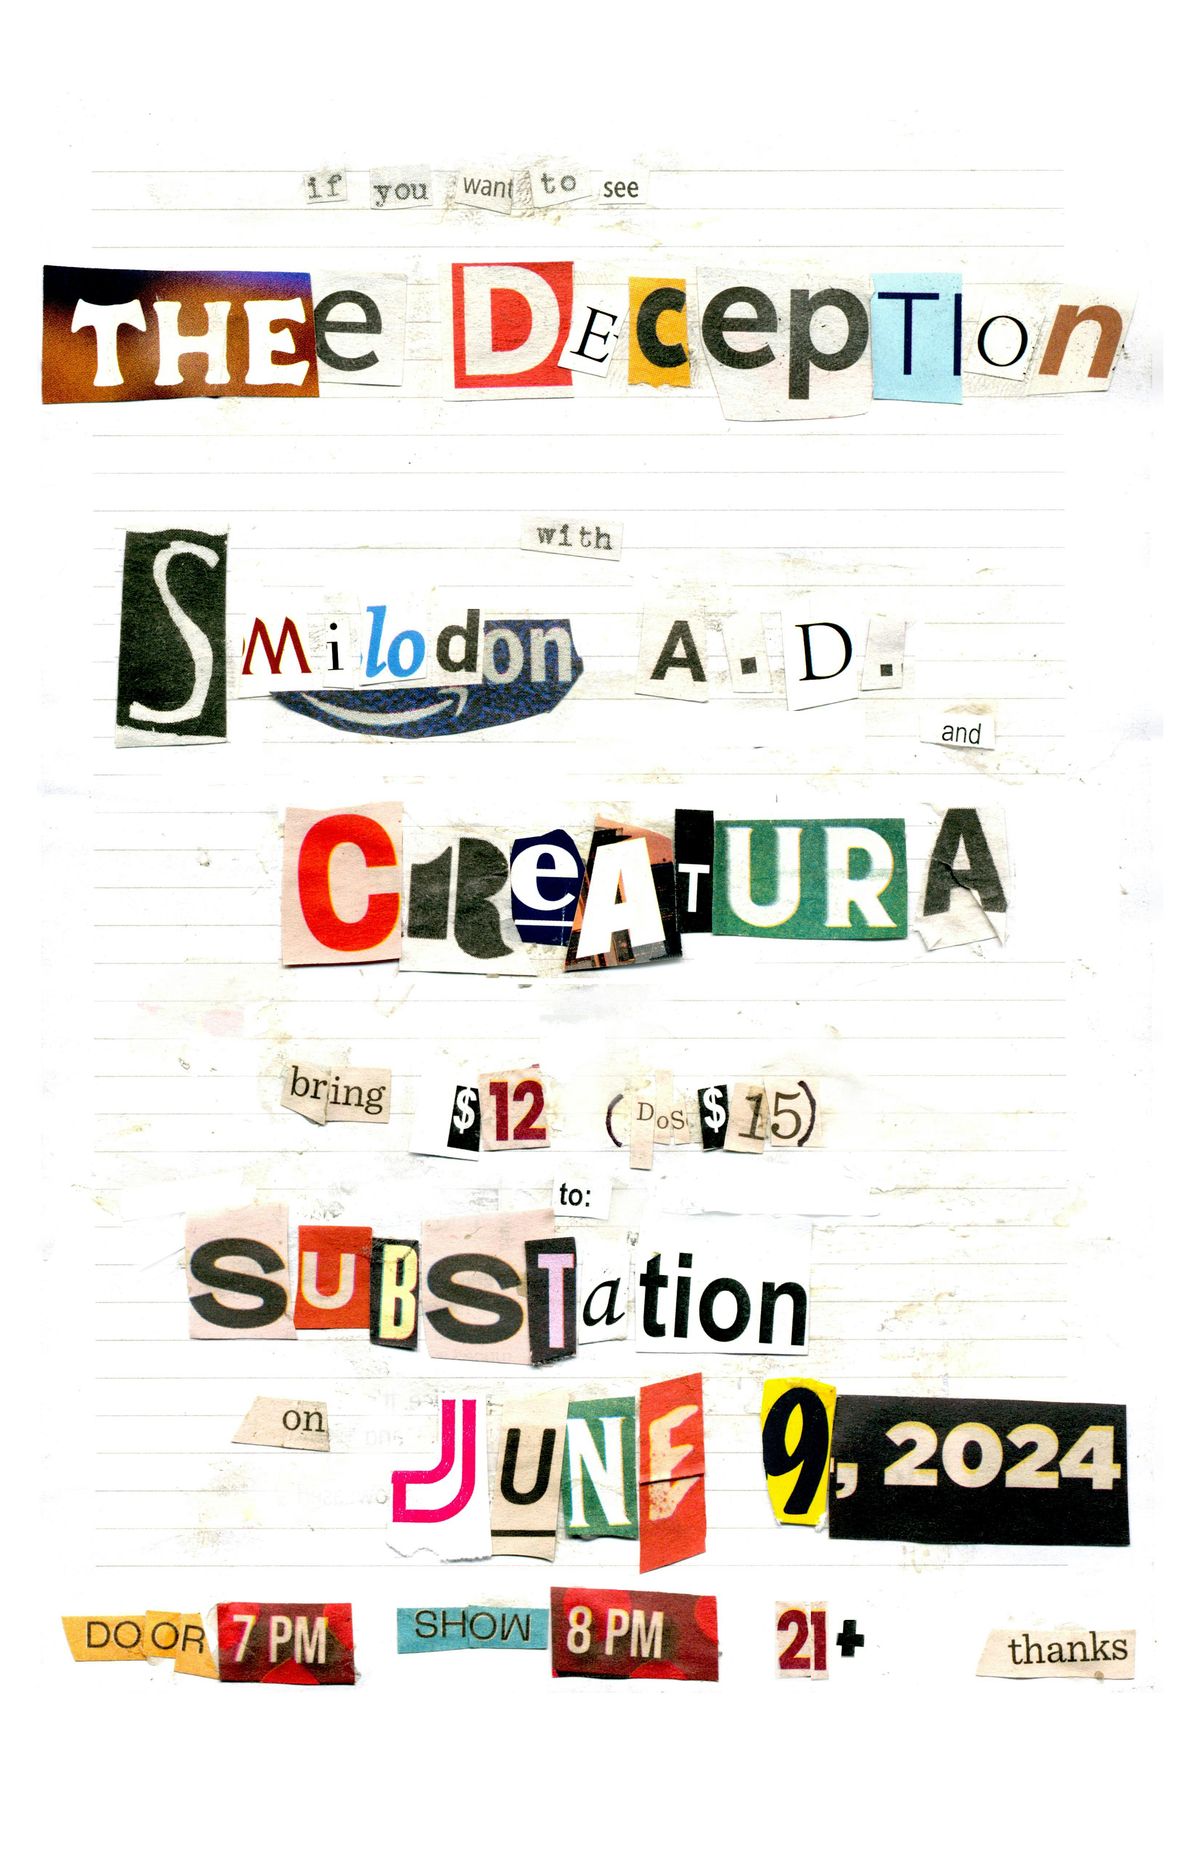 Thee Deception, Smilodon A.D. & Creatura